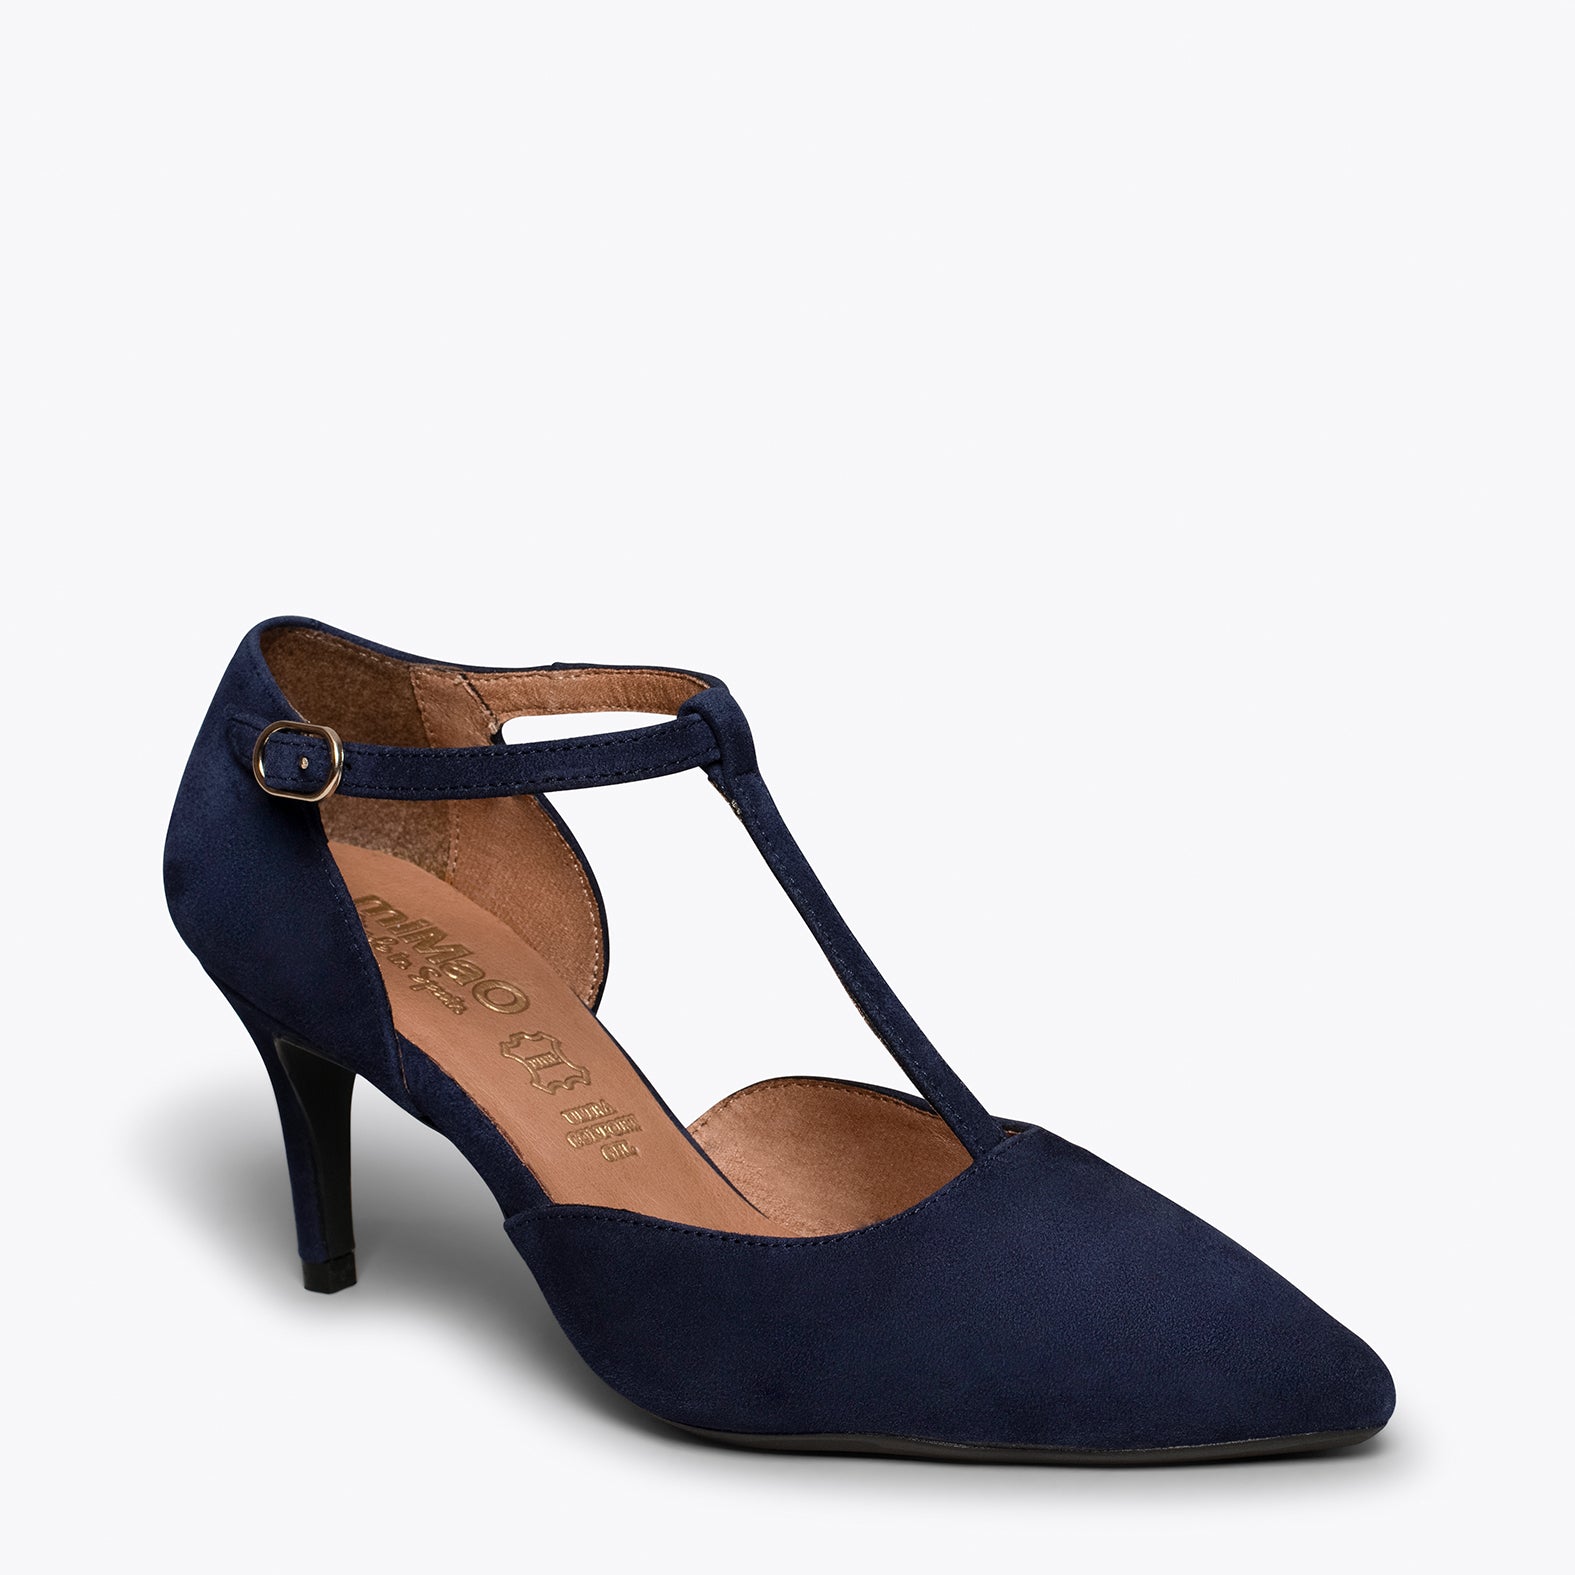 COCKTAIL – NAVY elegant mid heel shoes